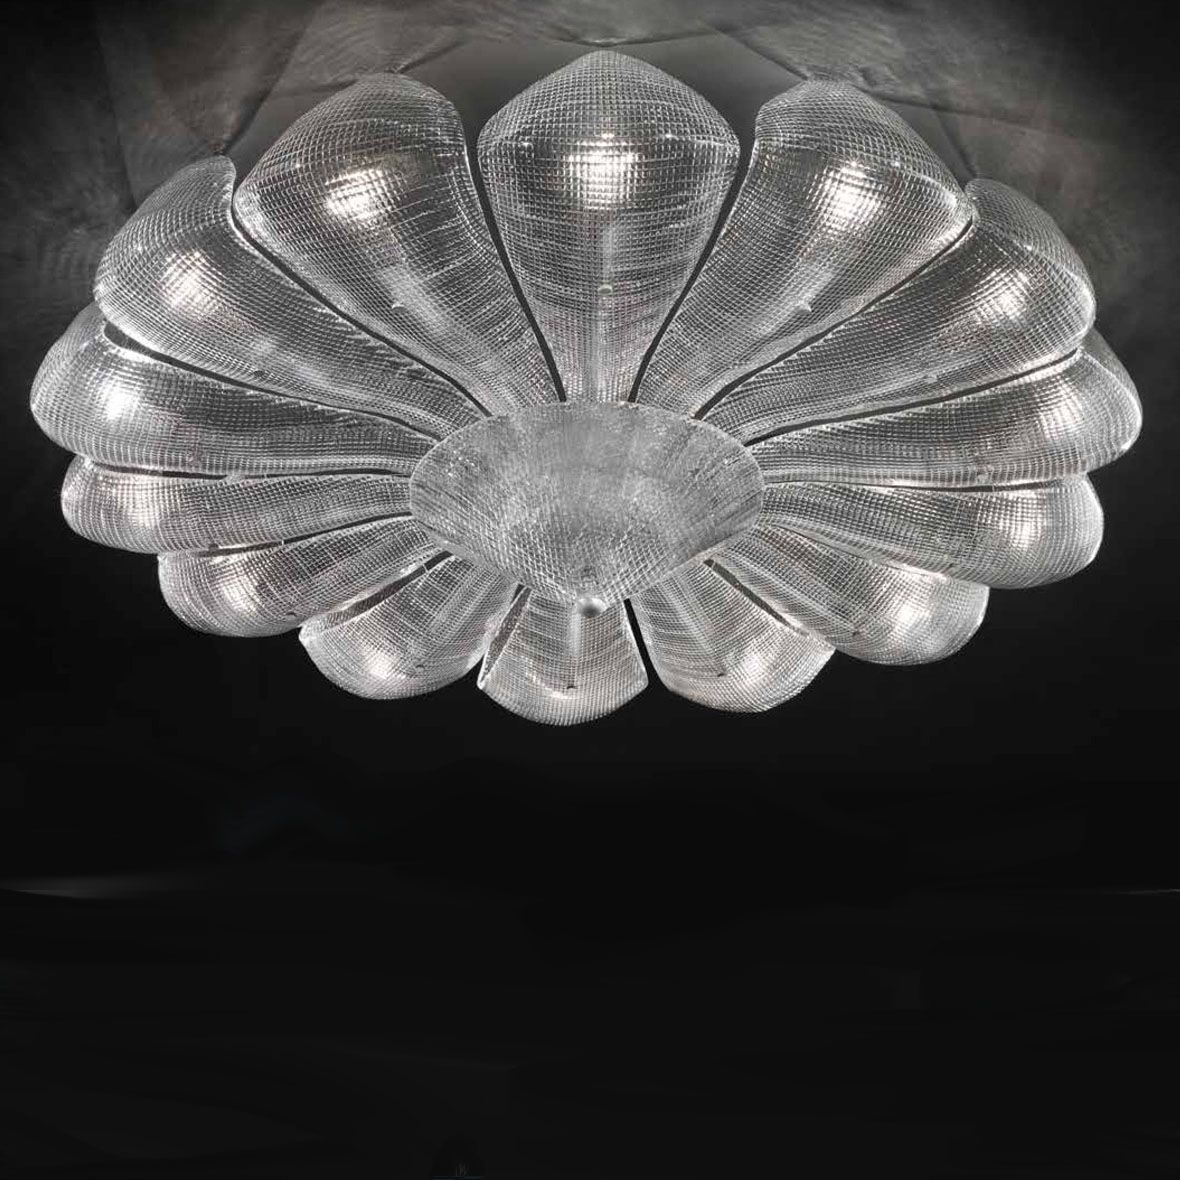 Naga 2 art. 1600/P CC - Сlear Sculptural Ceiling Lamp by Glass & Glass Murano